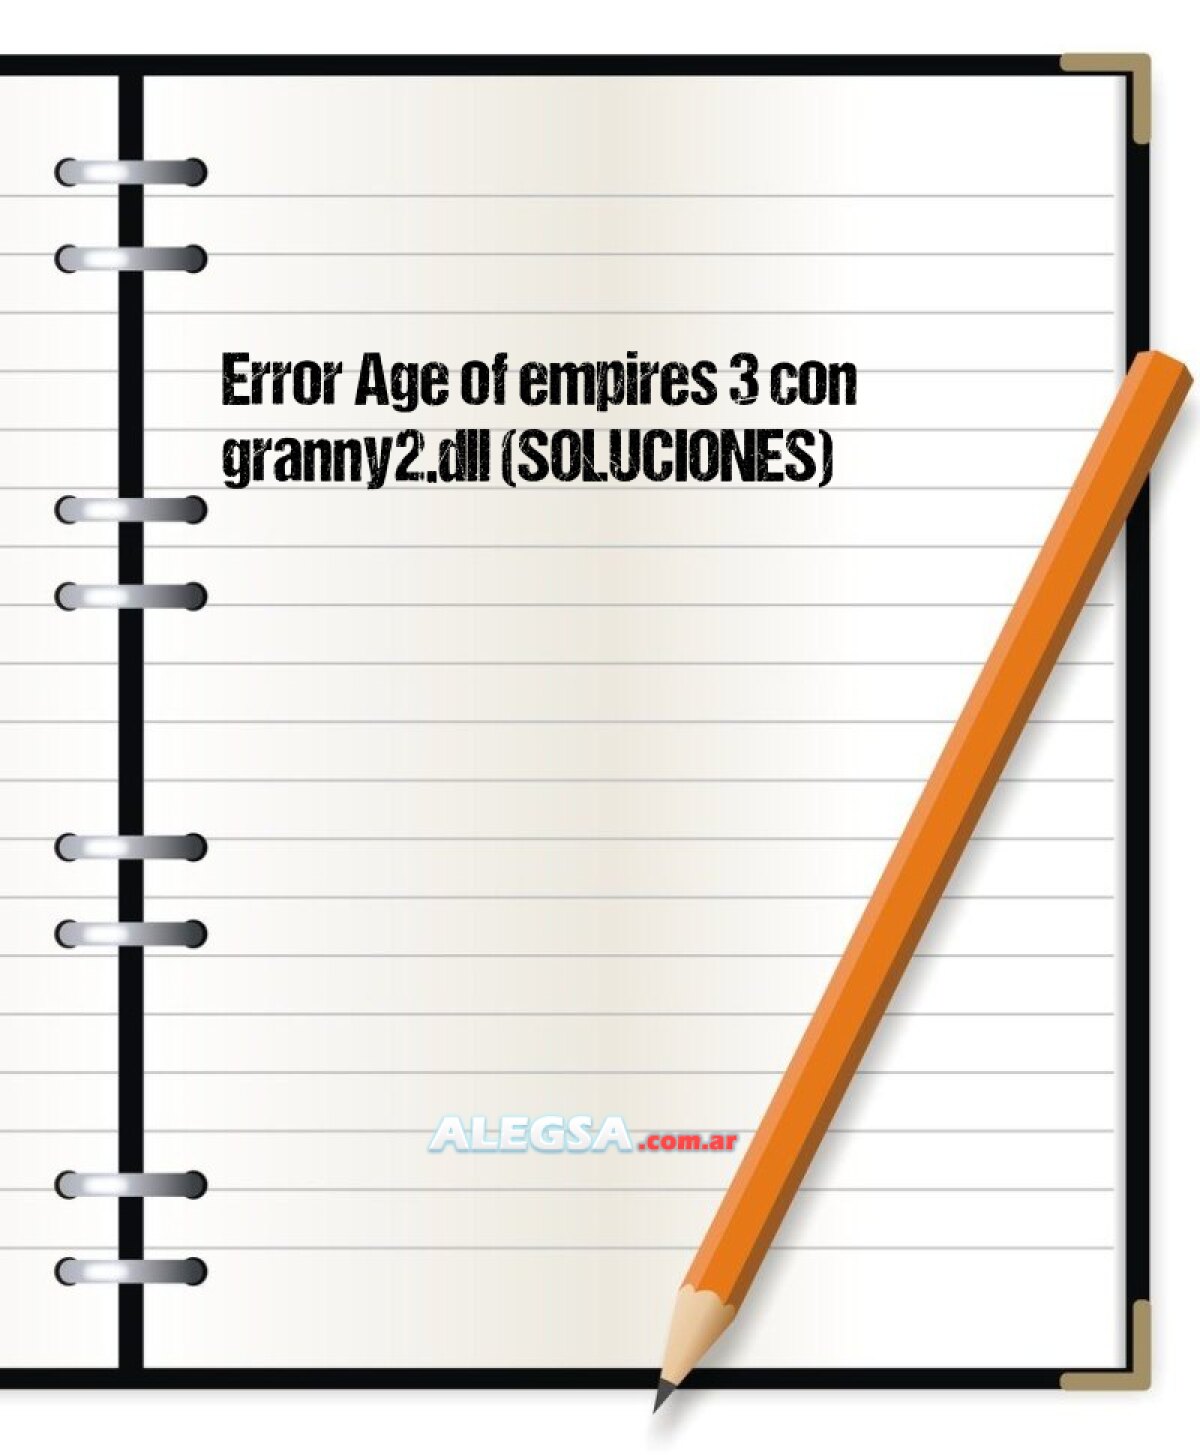 Error Age of empires 3 con granny2.dll (SOLUCIONES)